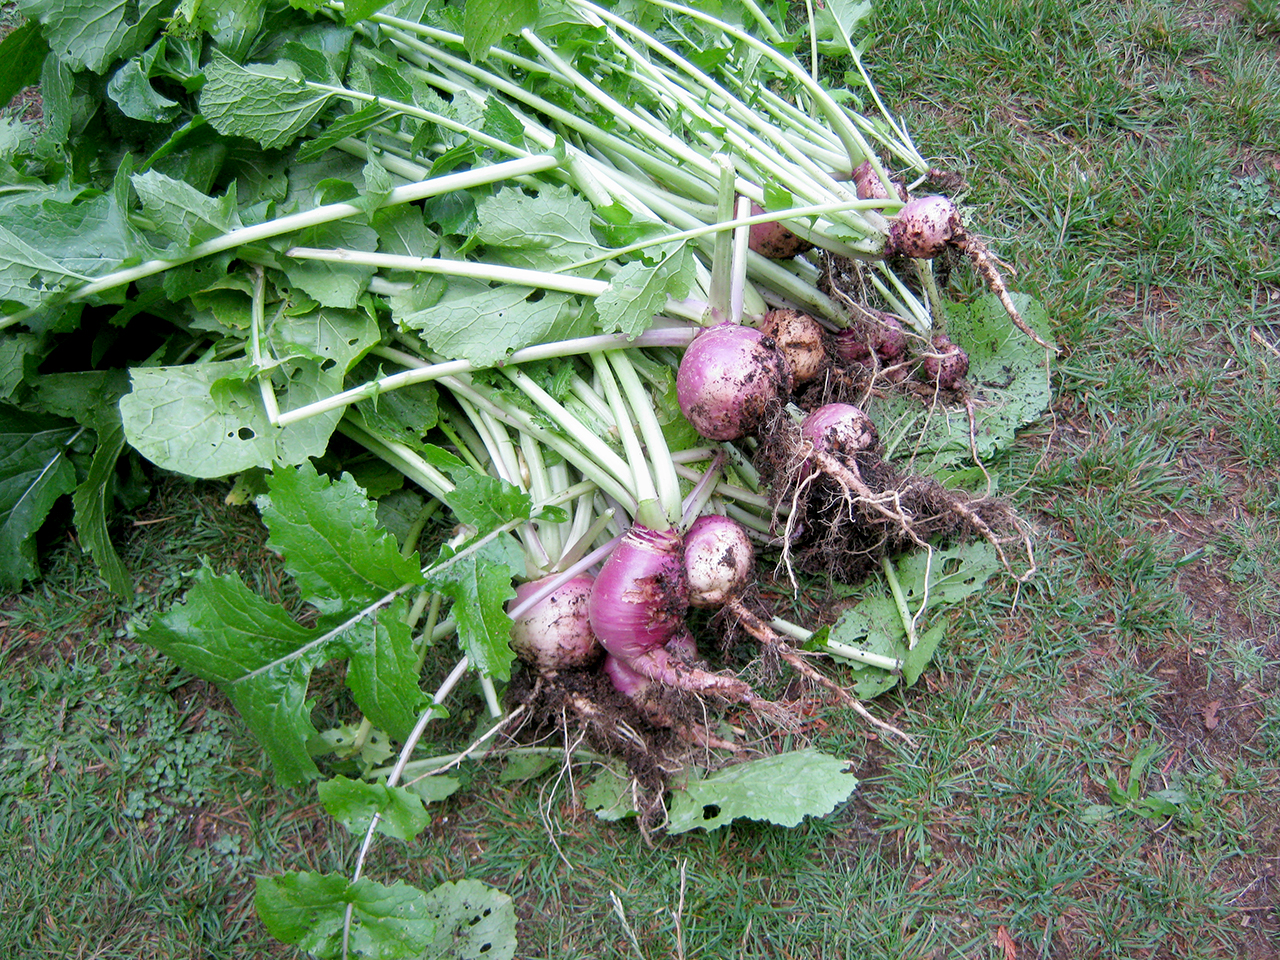 Harvesting turnips